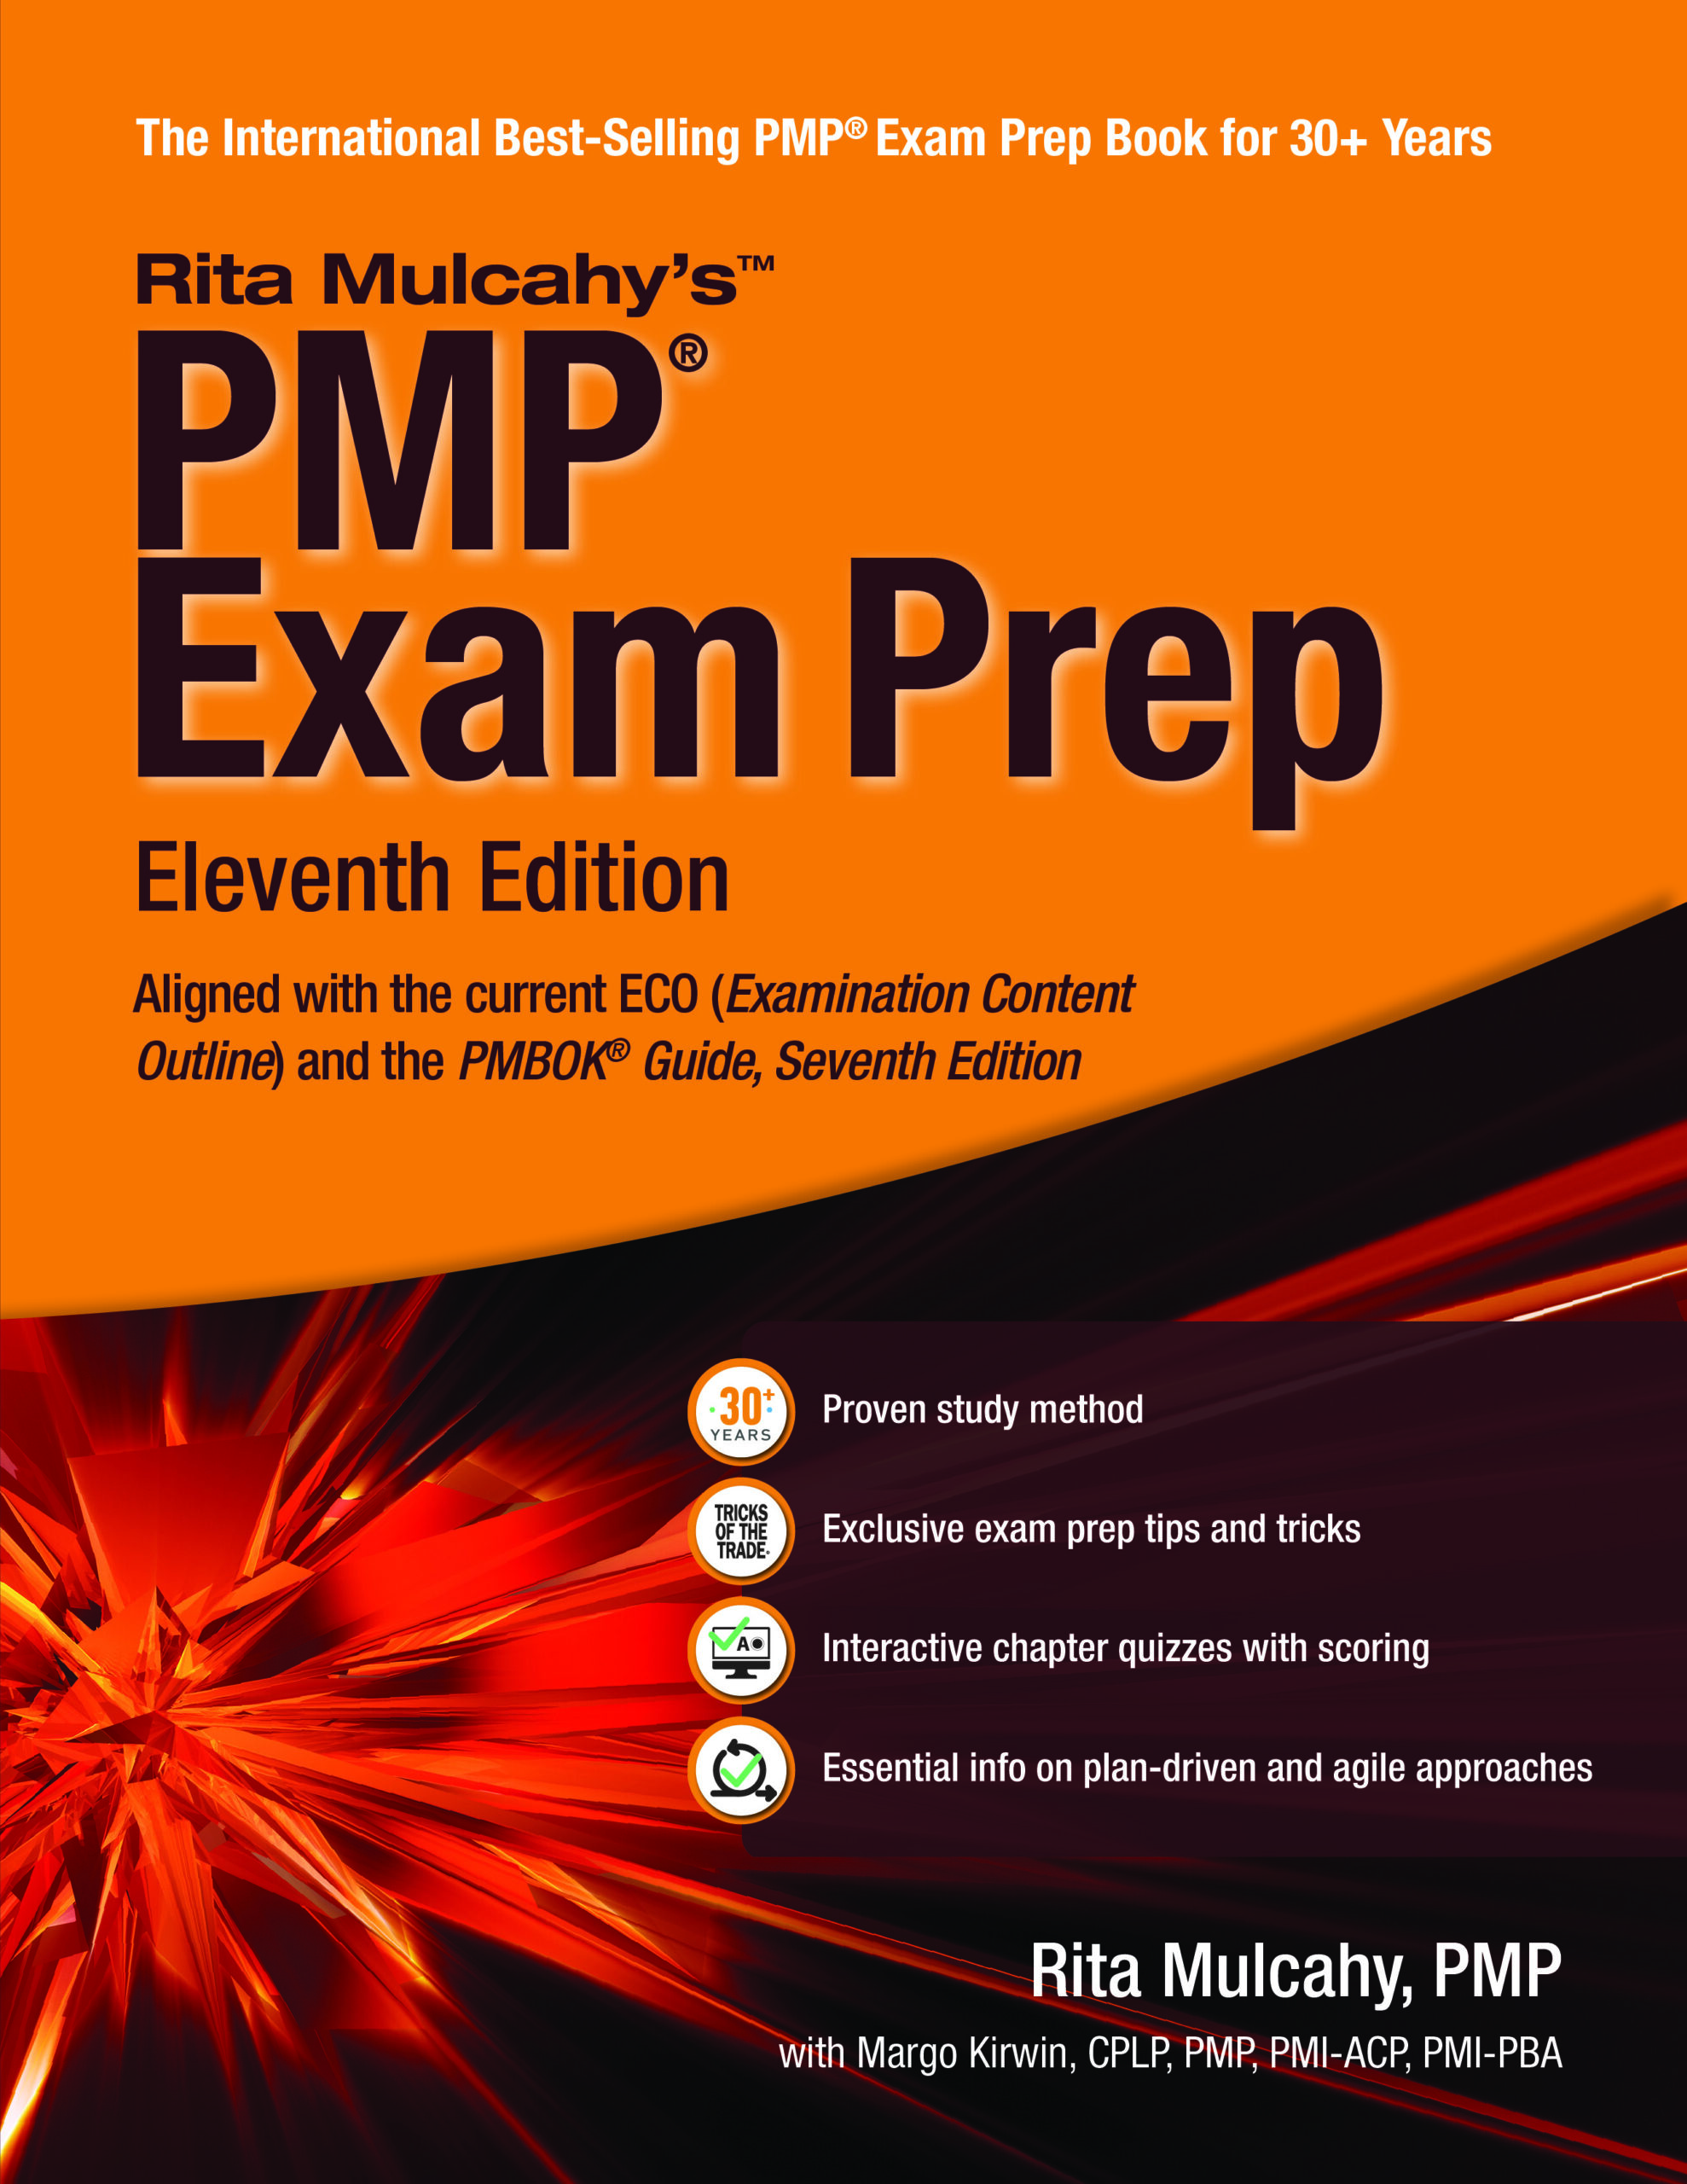 image of Rita Mulcahy's PMP Exam Prep book 11th edition